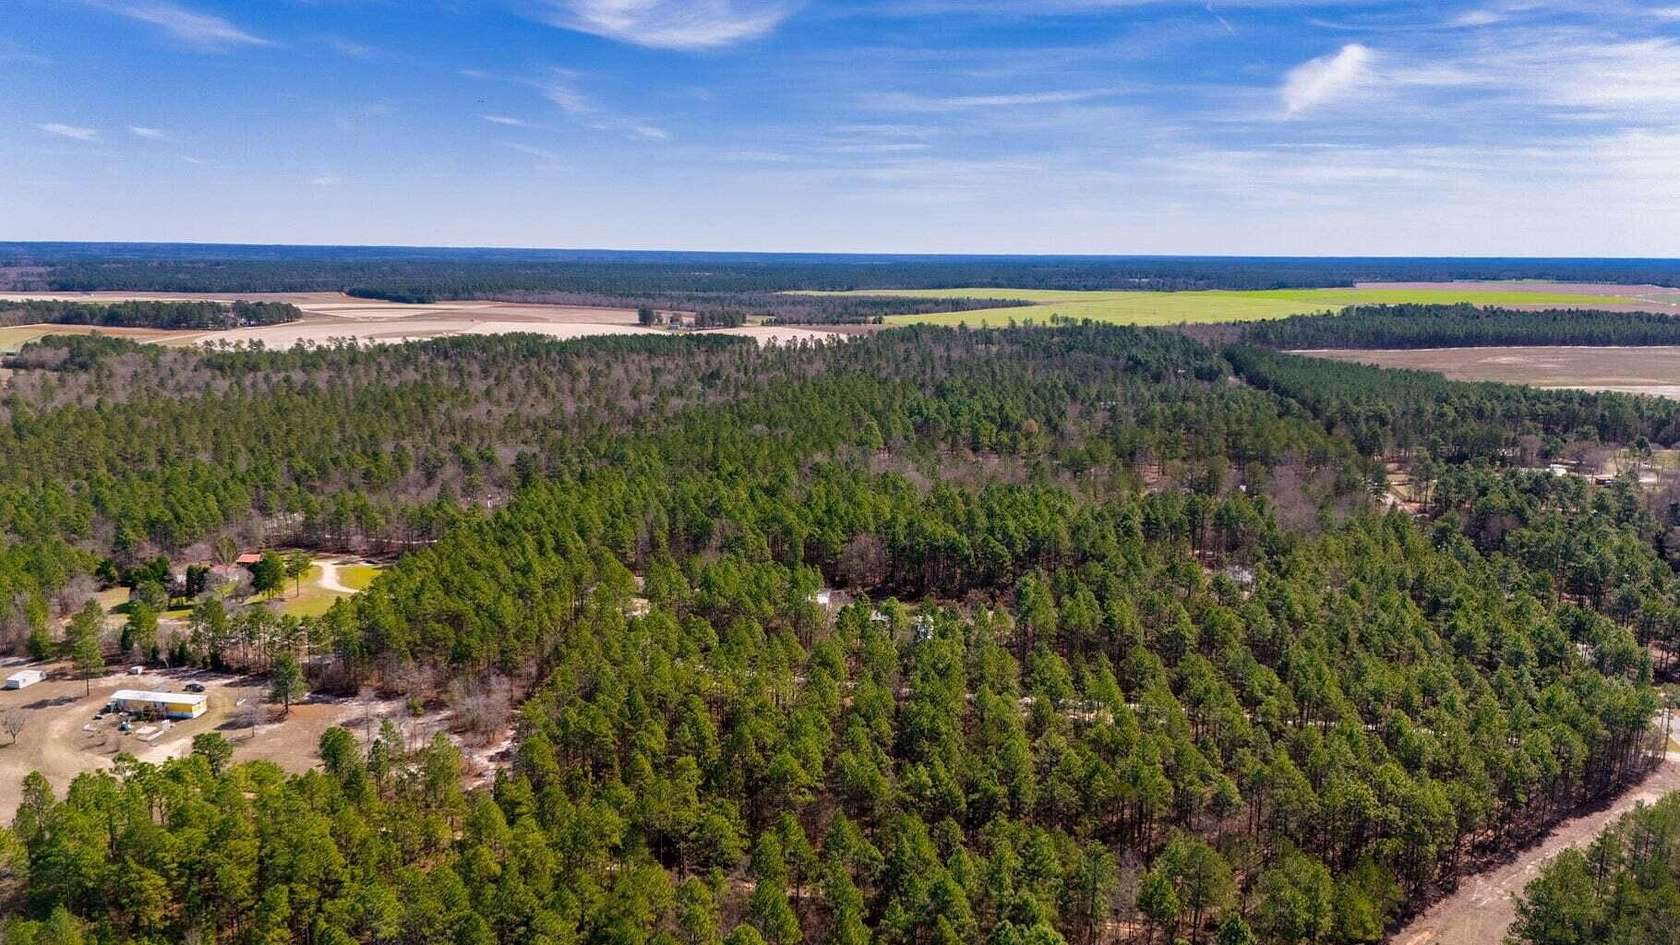 154 Acres of Recreational Land for Sale in Aiken, South Carolina